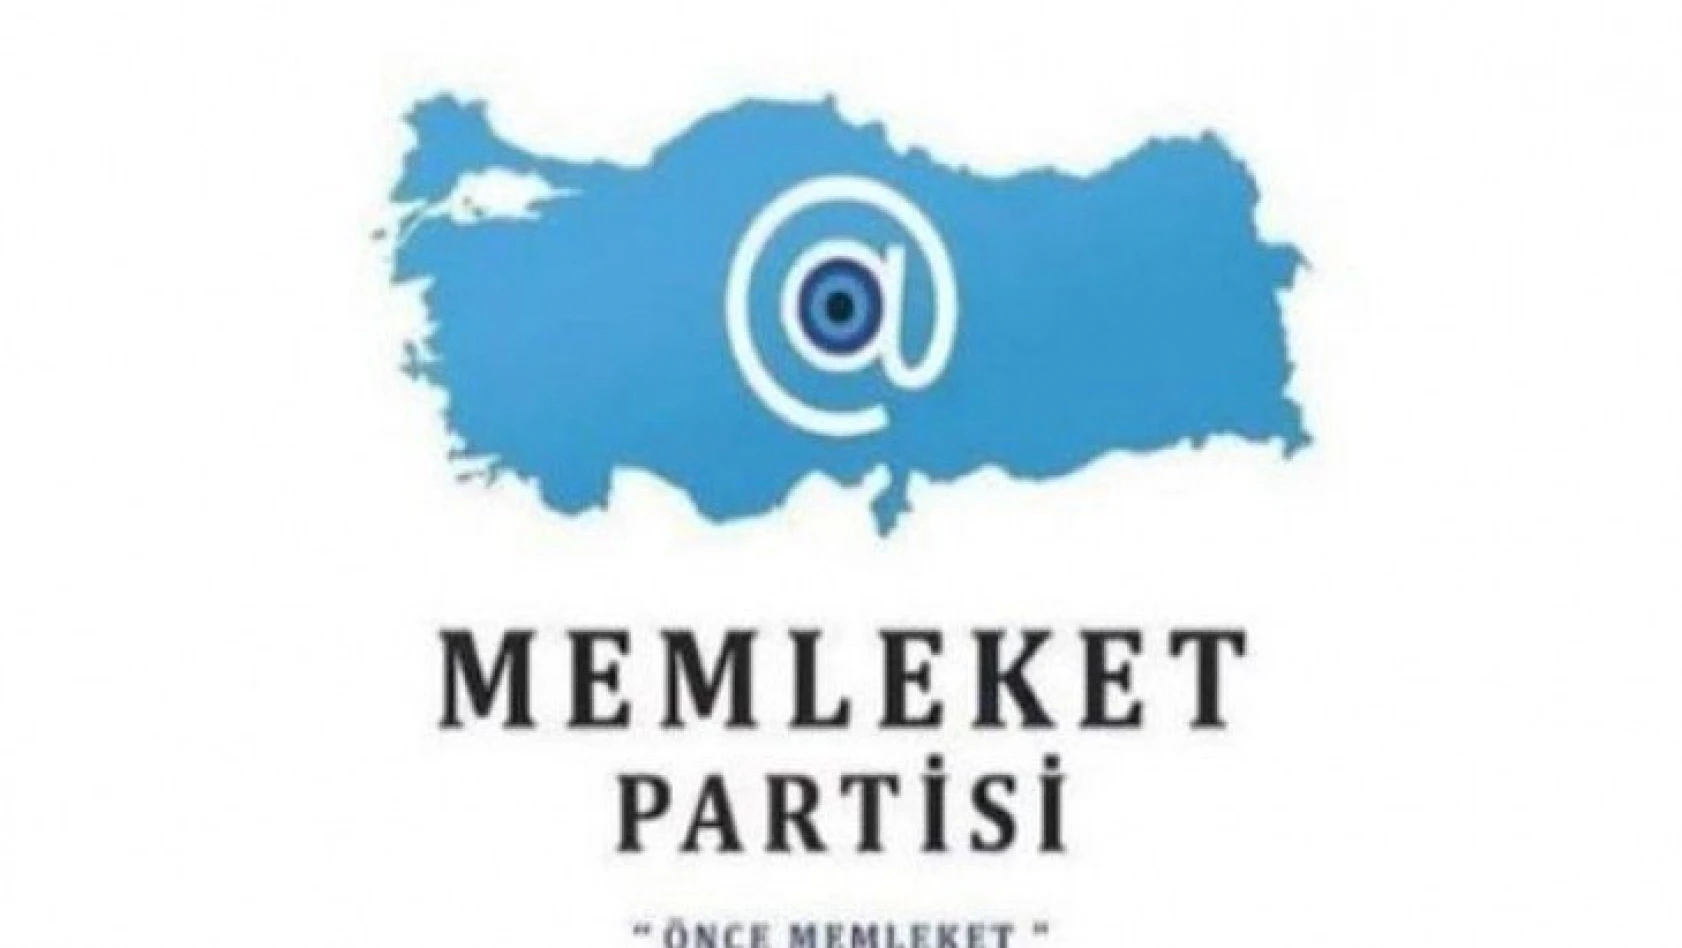 Memleket Partisi'nin logosu belli oldu